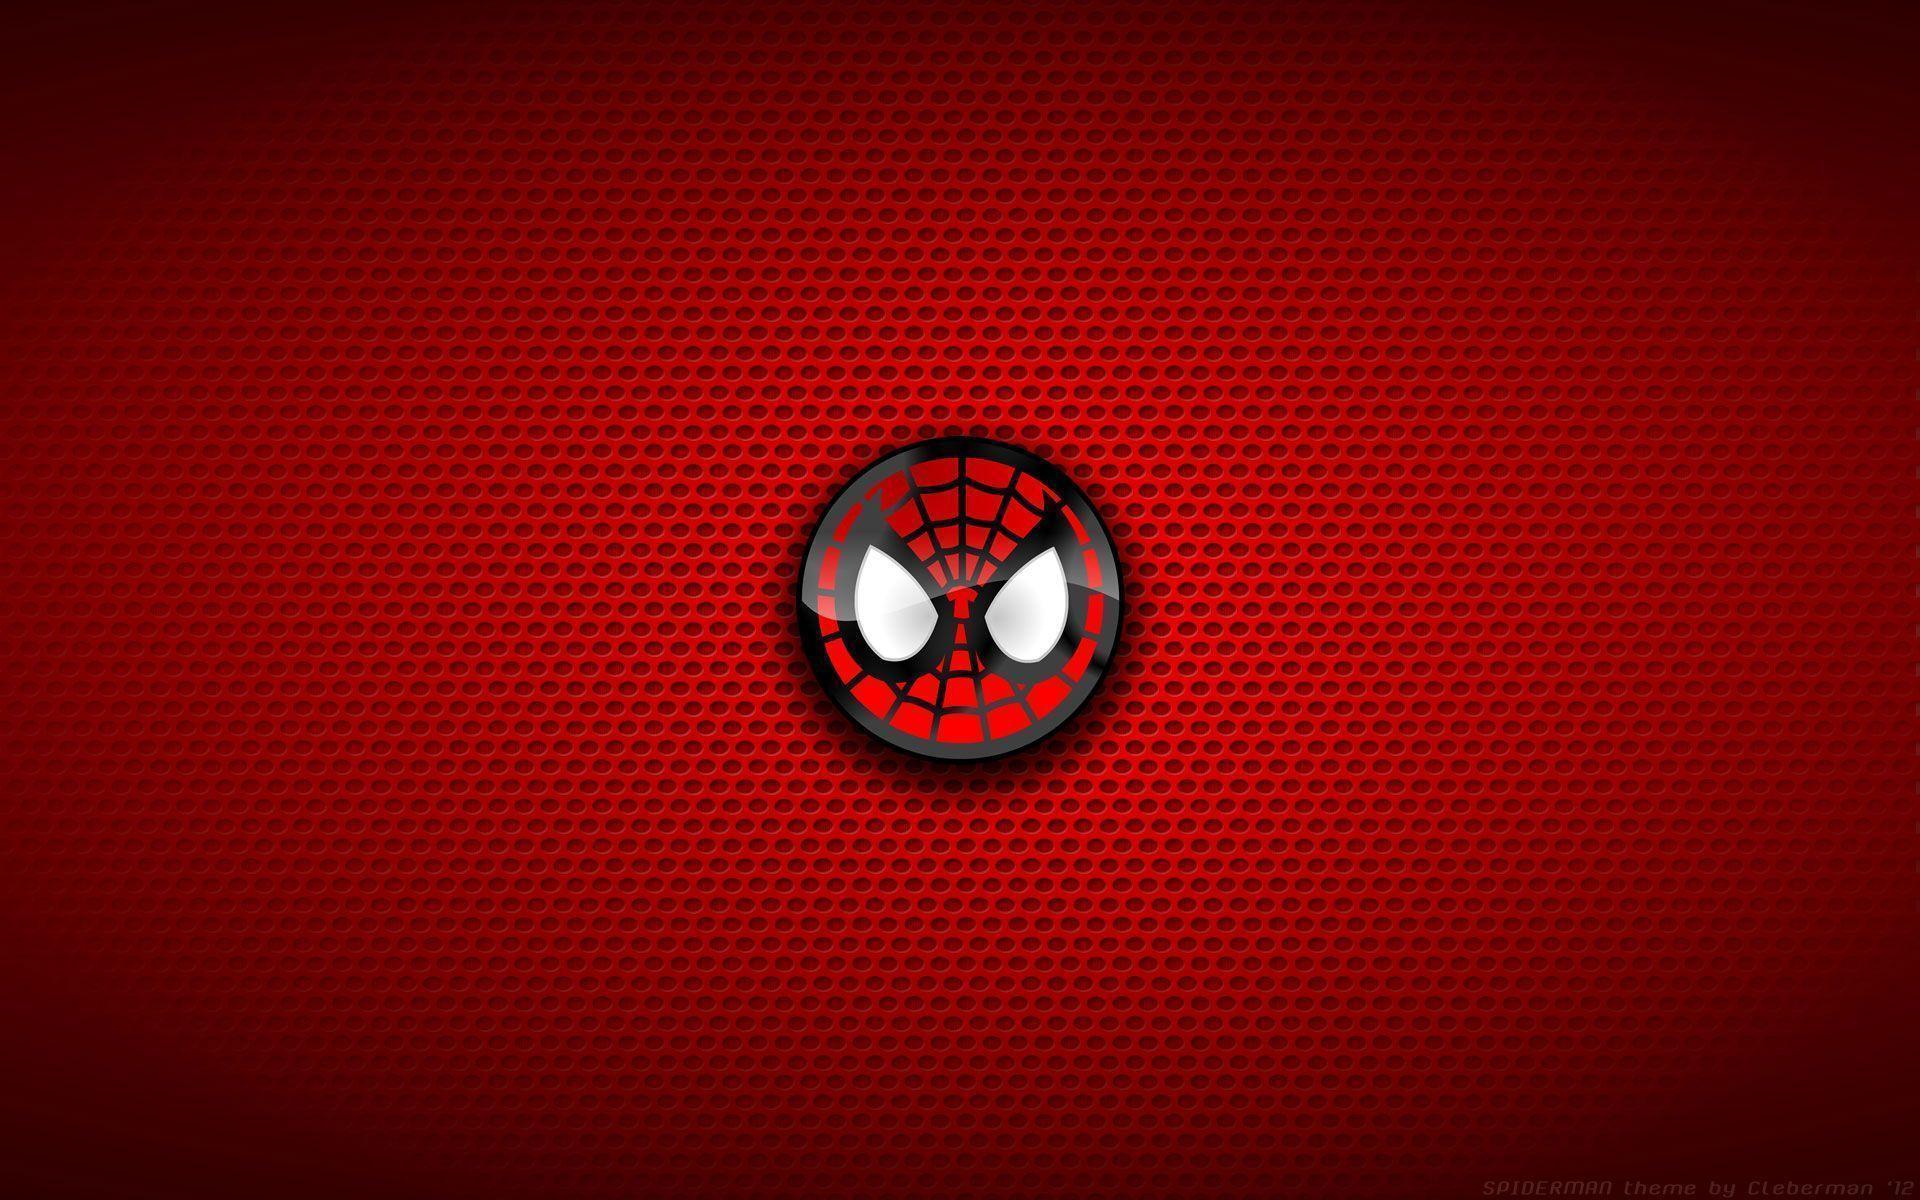 Amazing Spiderman logo 4K wallpaper download